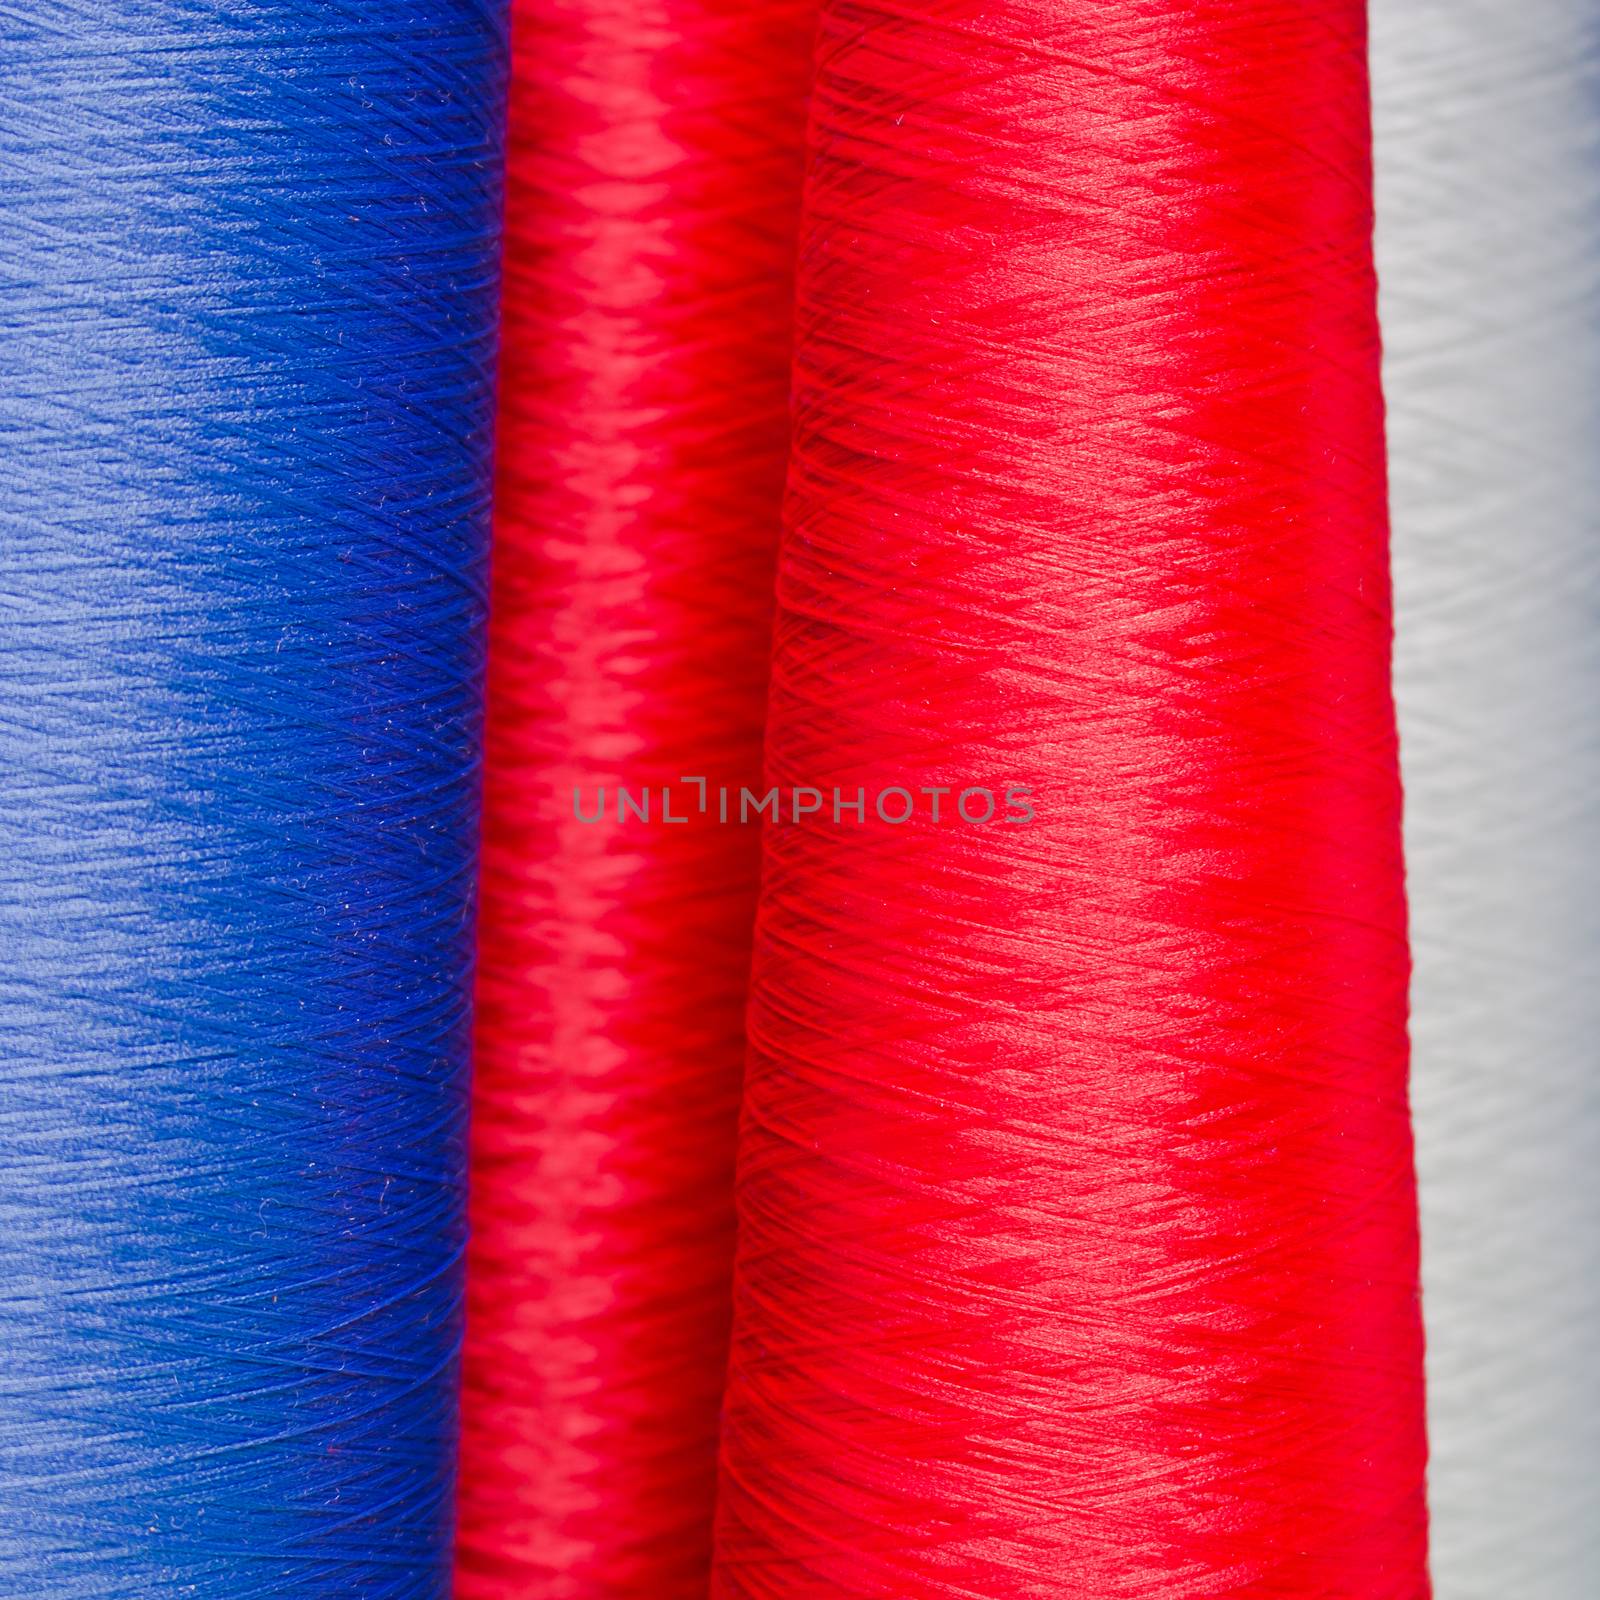 Colorful spool of thread